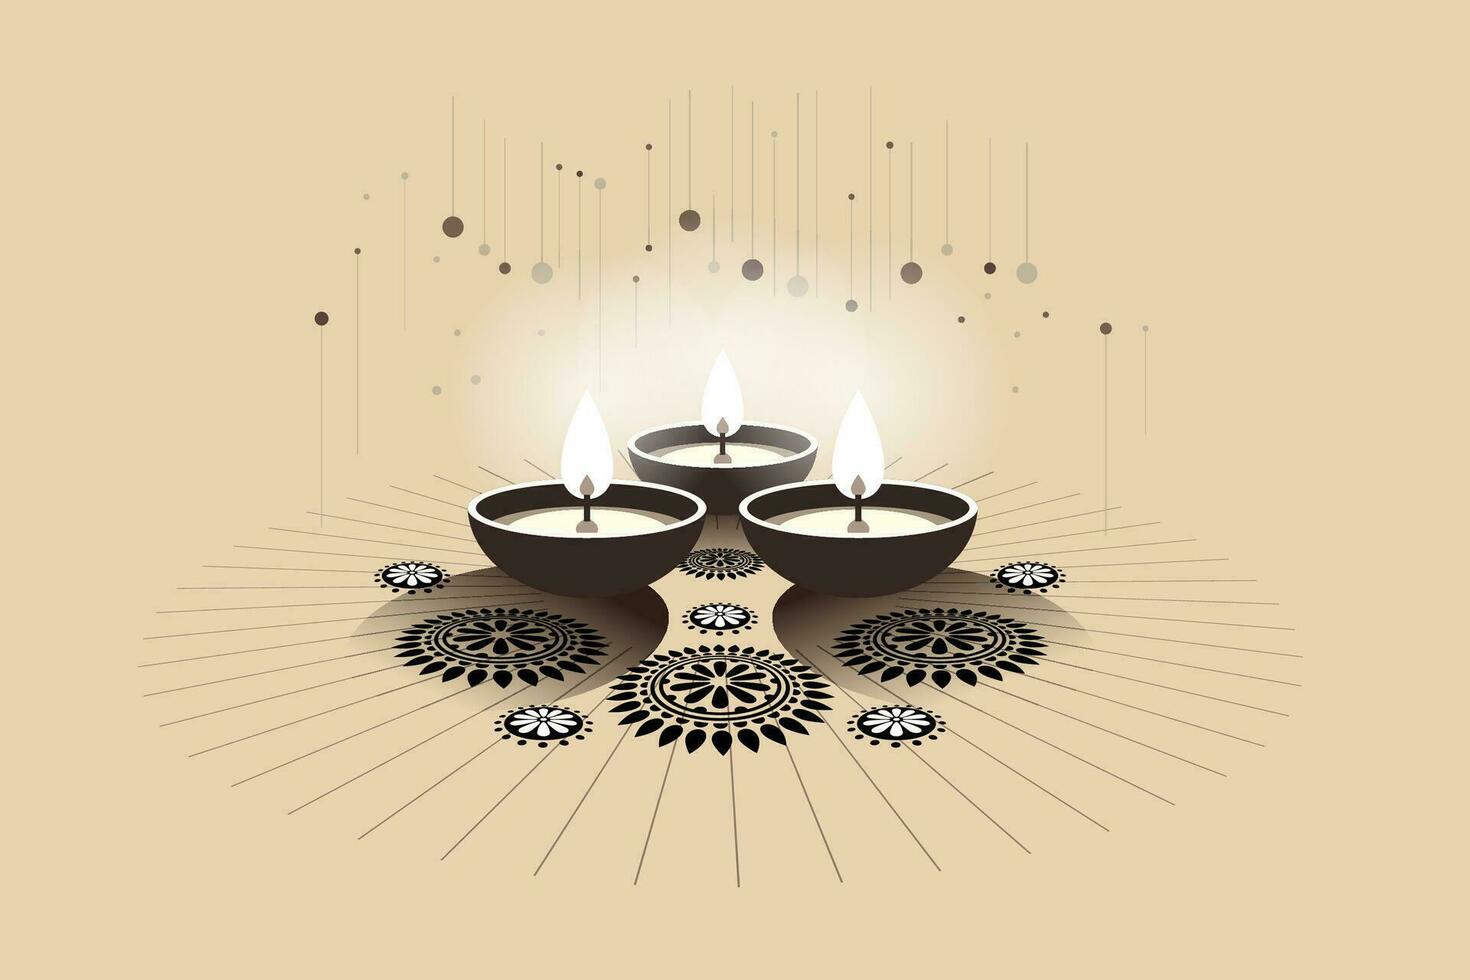 indiano festival diwali fundo com diya e minimalista rangoli elementos. vetor